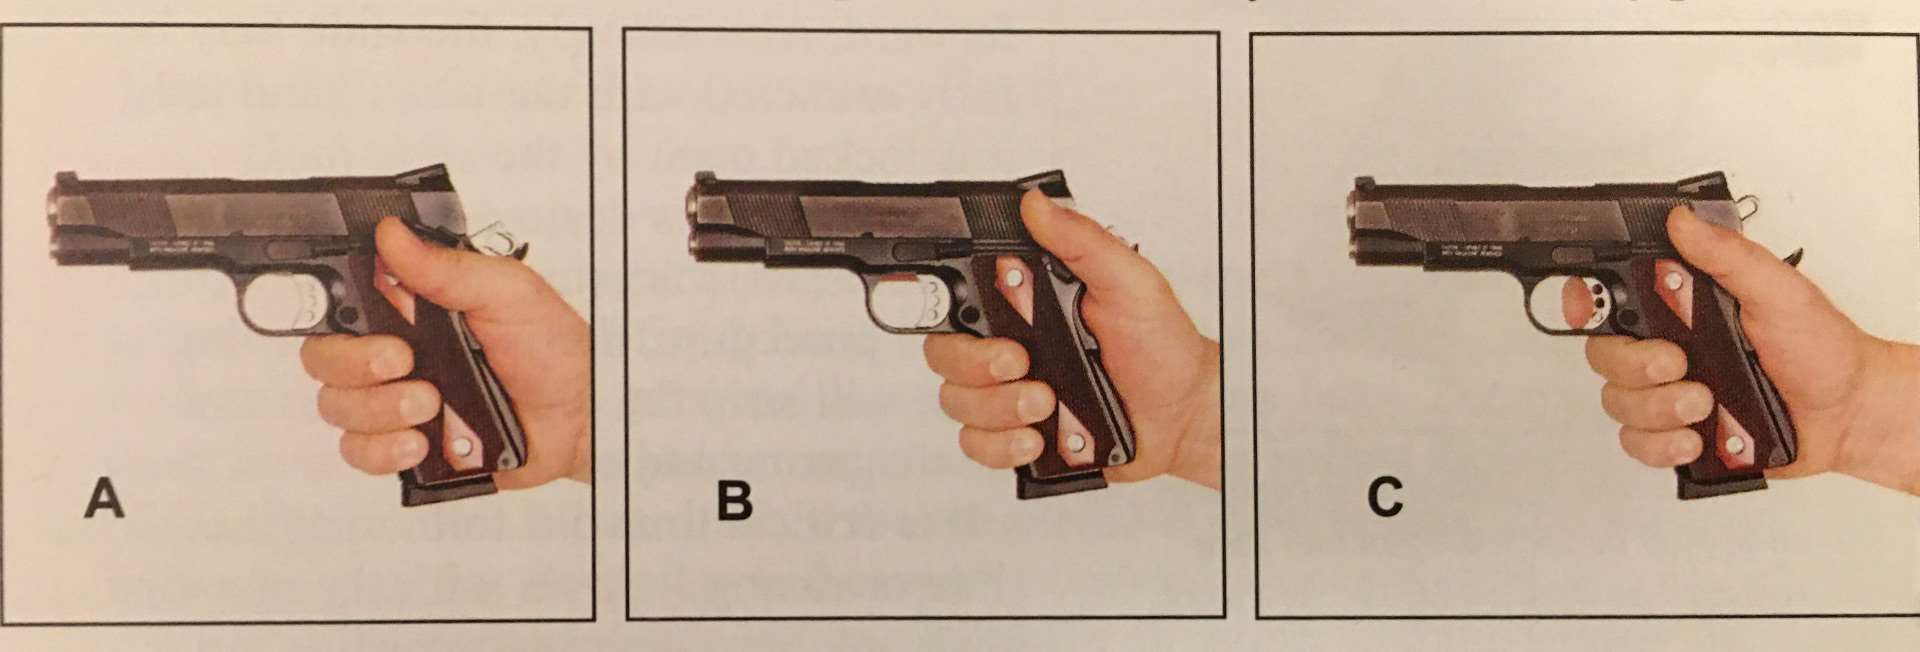 Firing a semi-automatic pistol